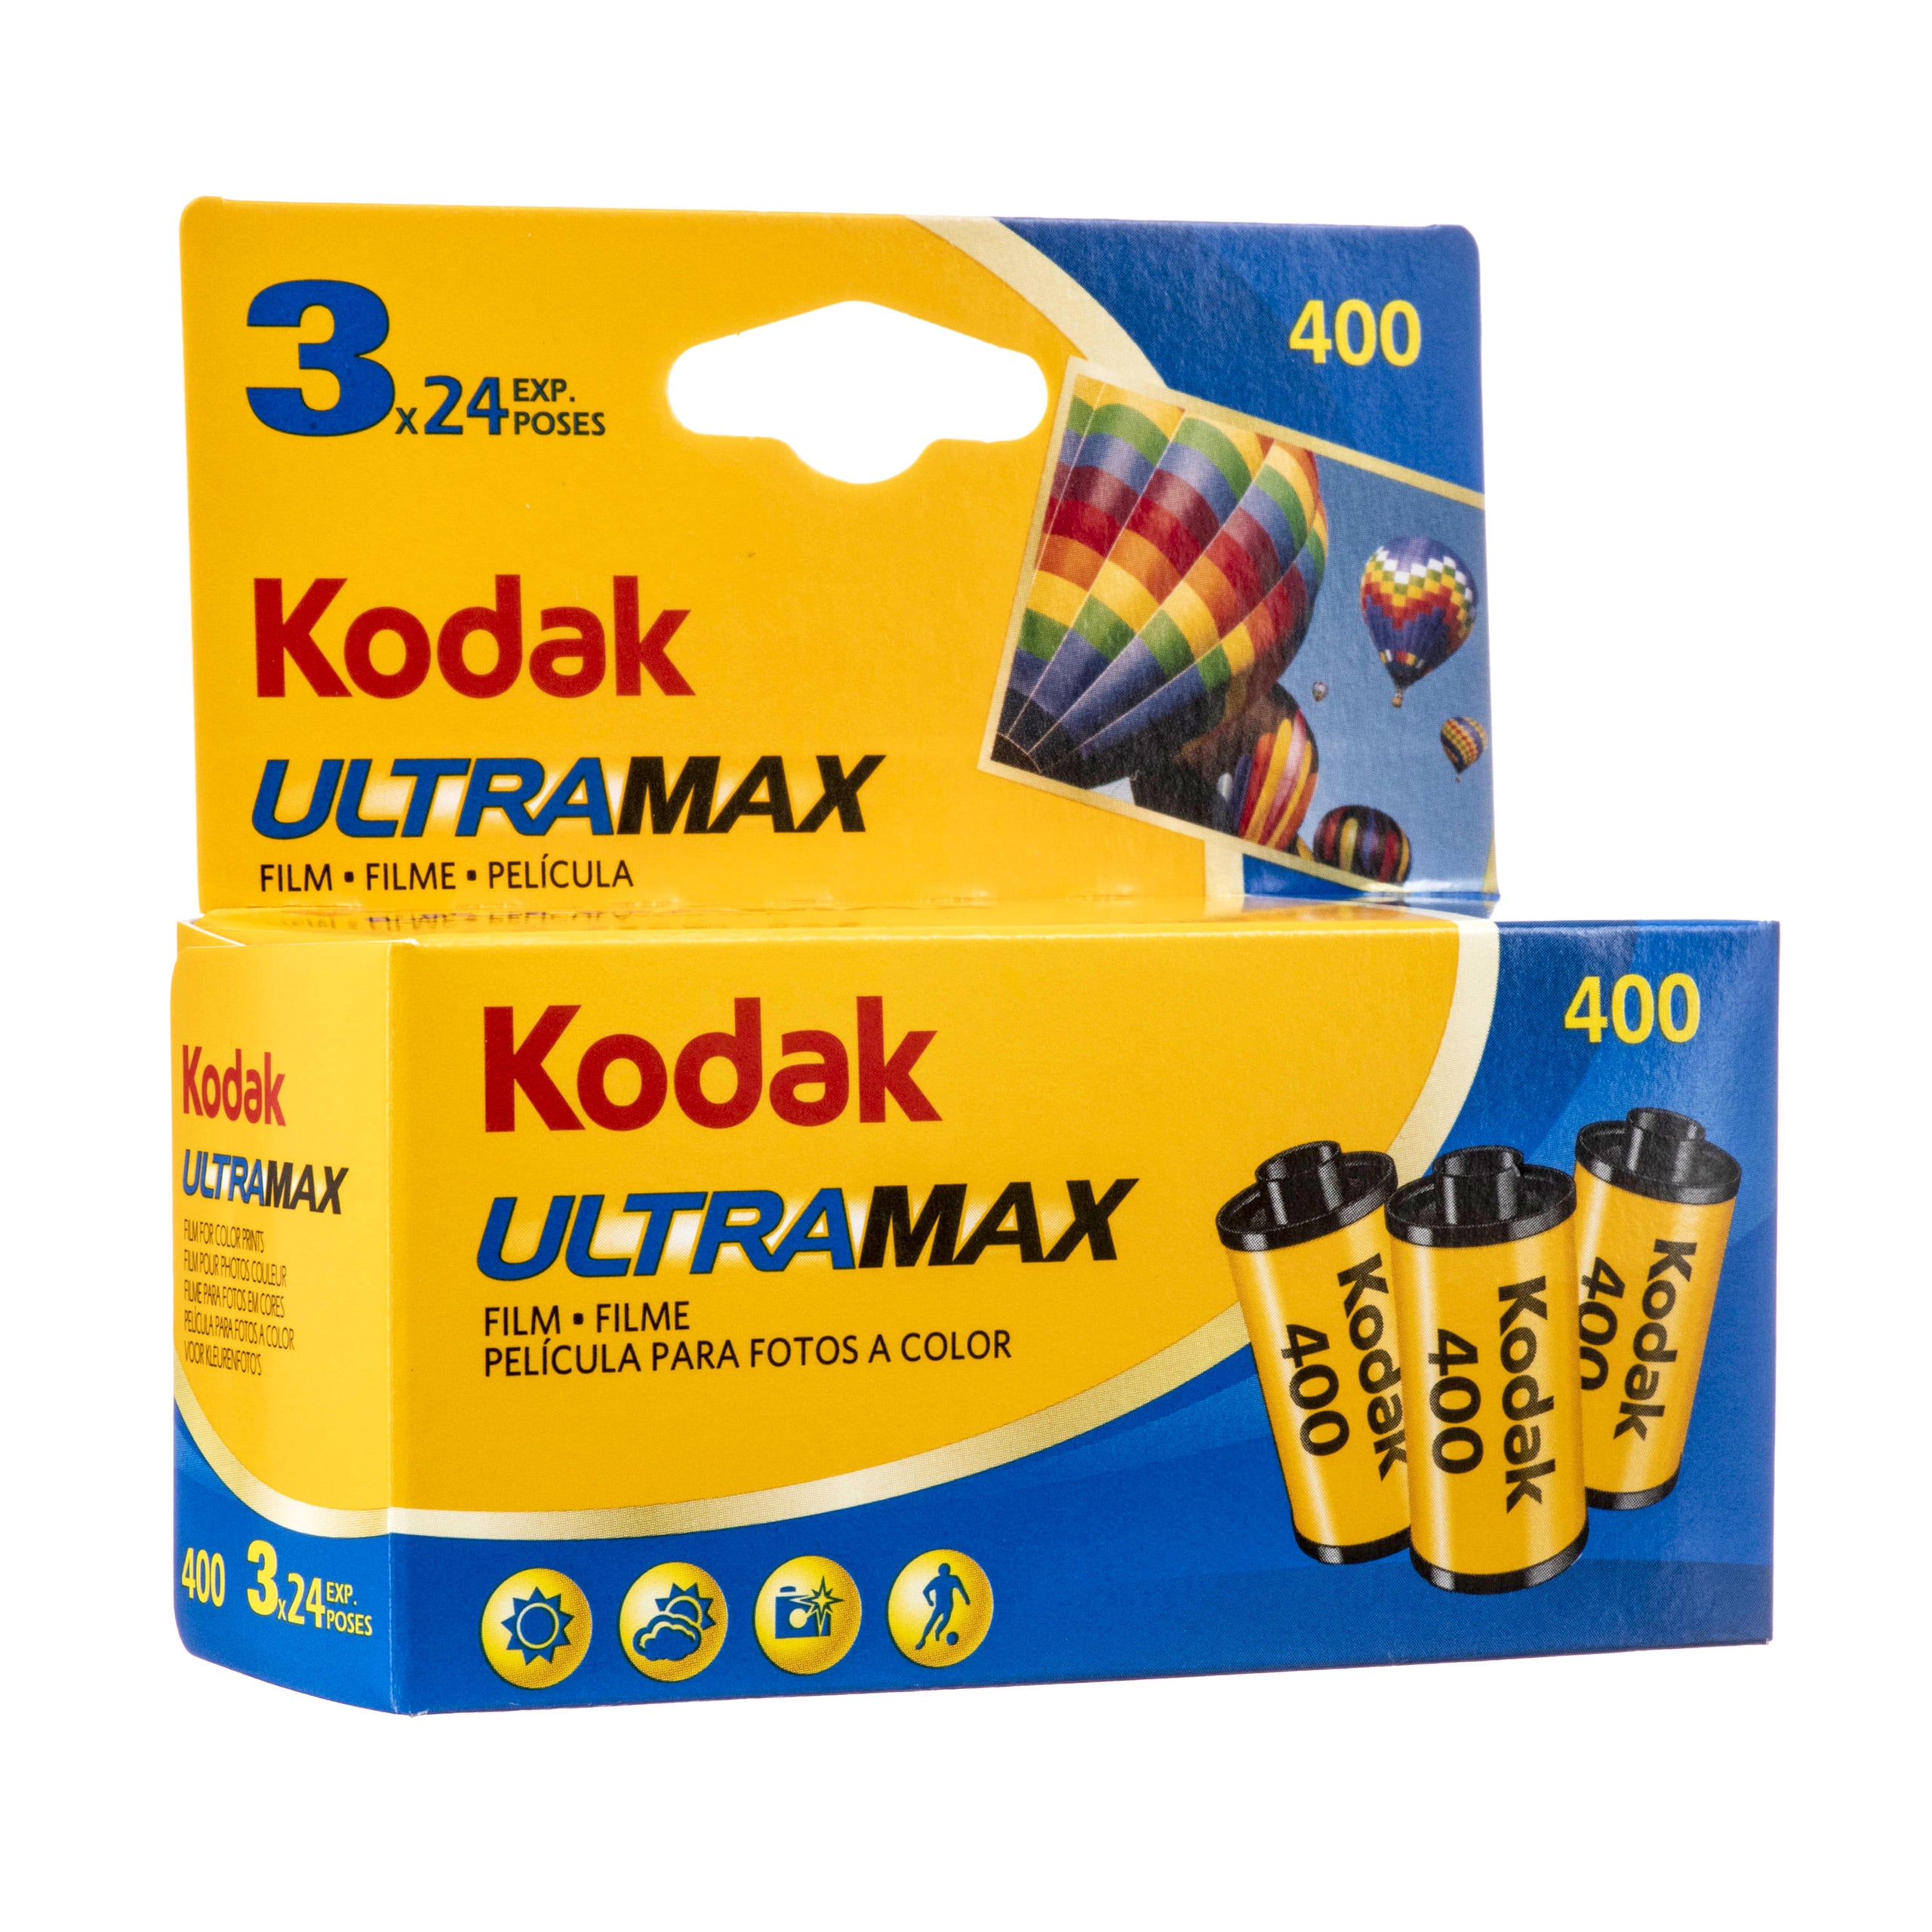 Kodak Ultramax 400 Film Exposure Roll